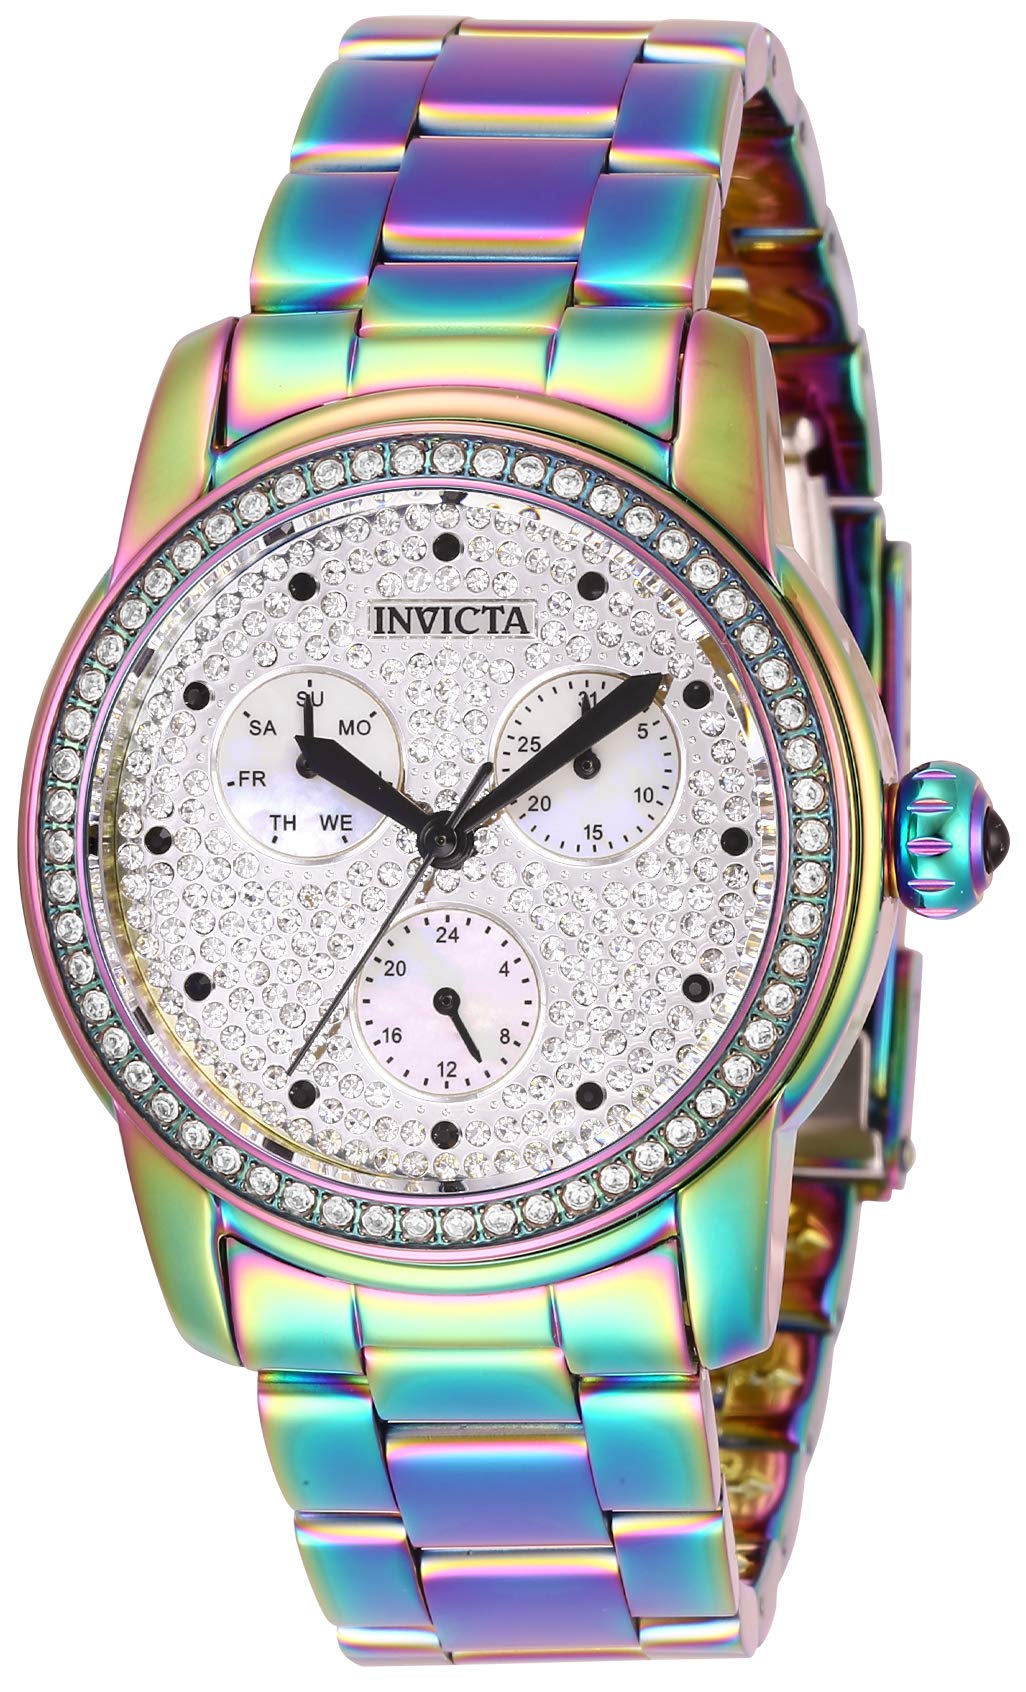 Invicta Women's Angel Quartz Watch, Iridescent, 30032